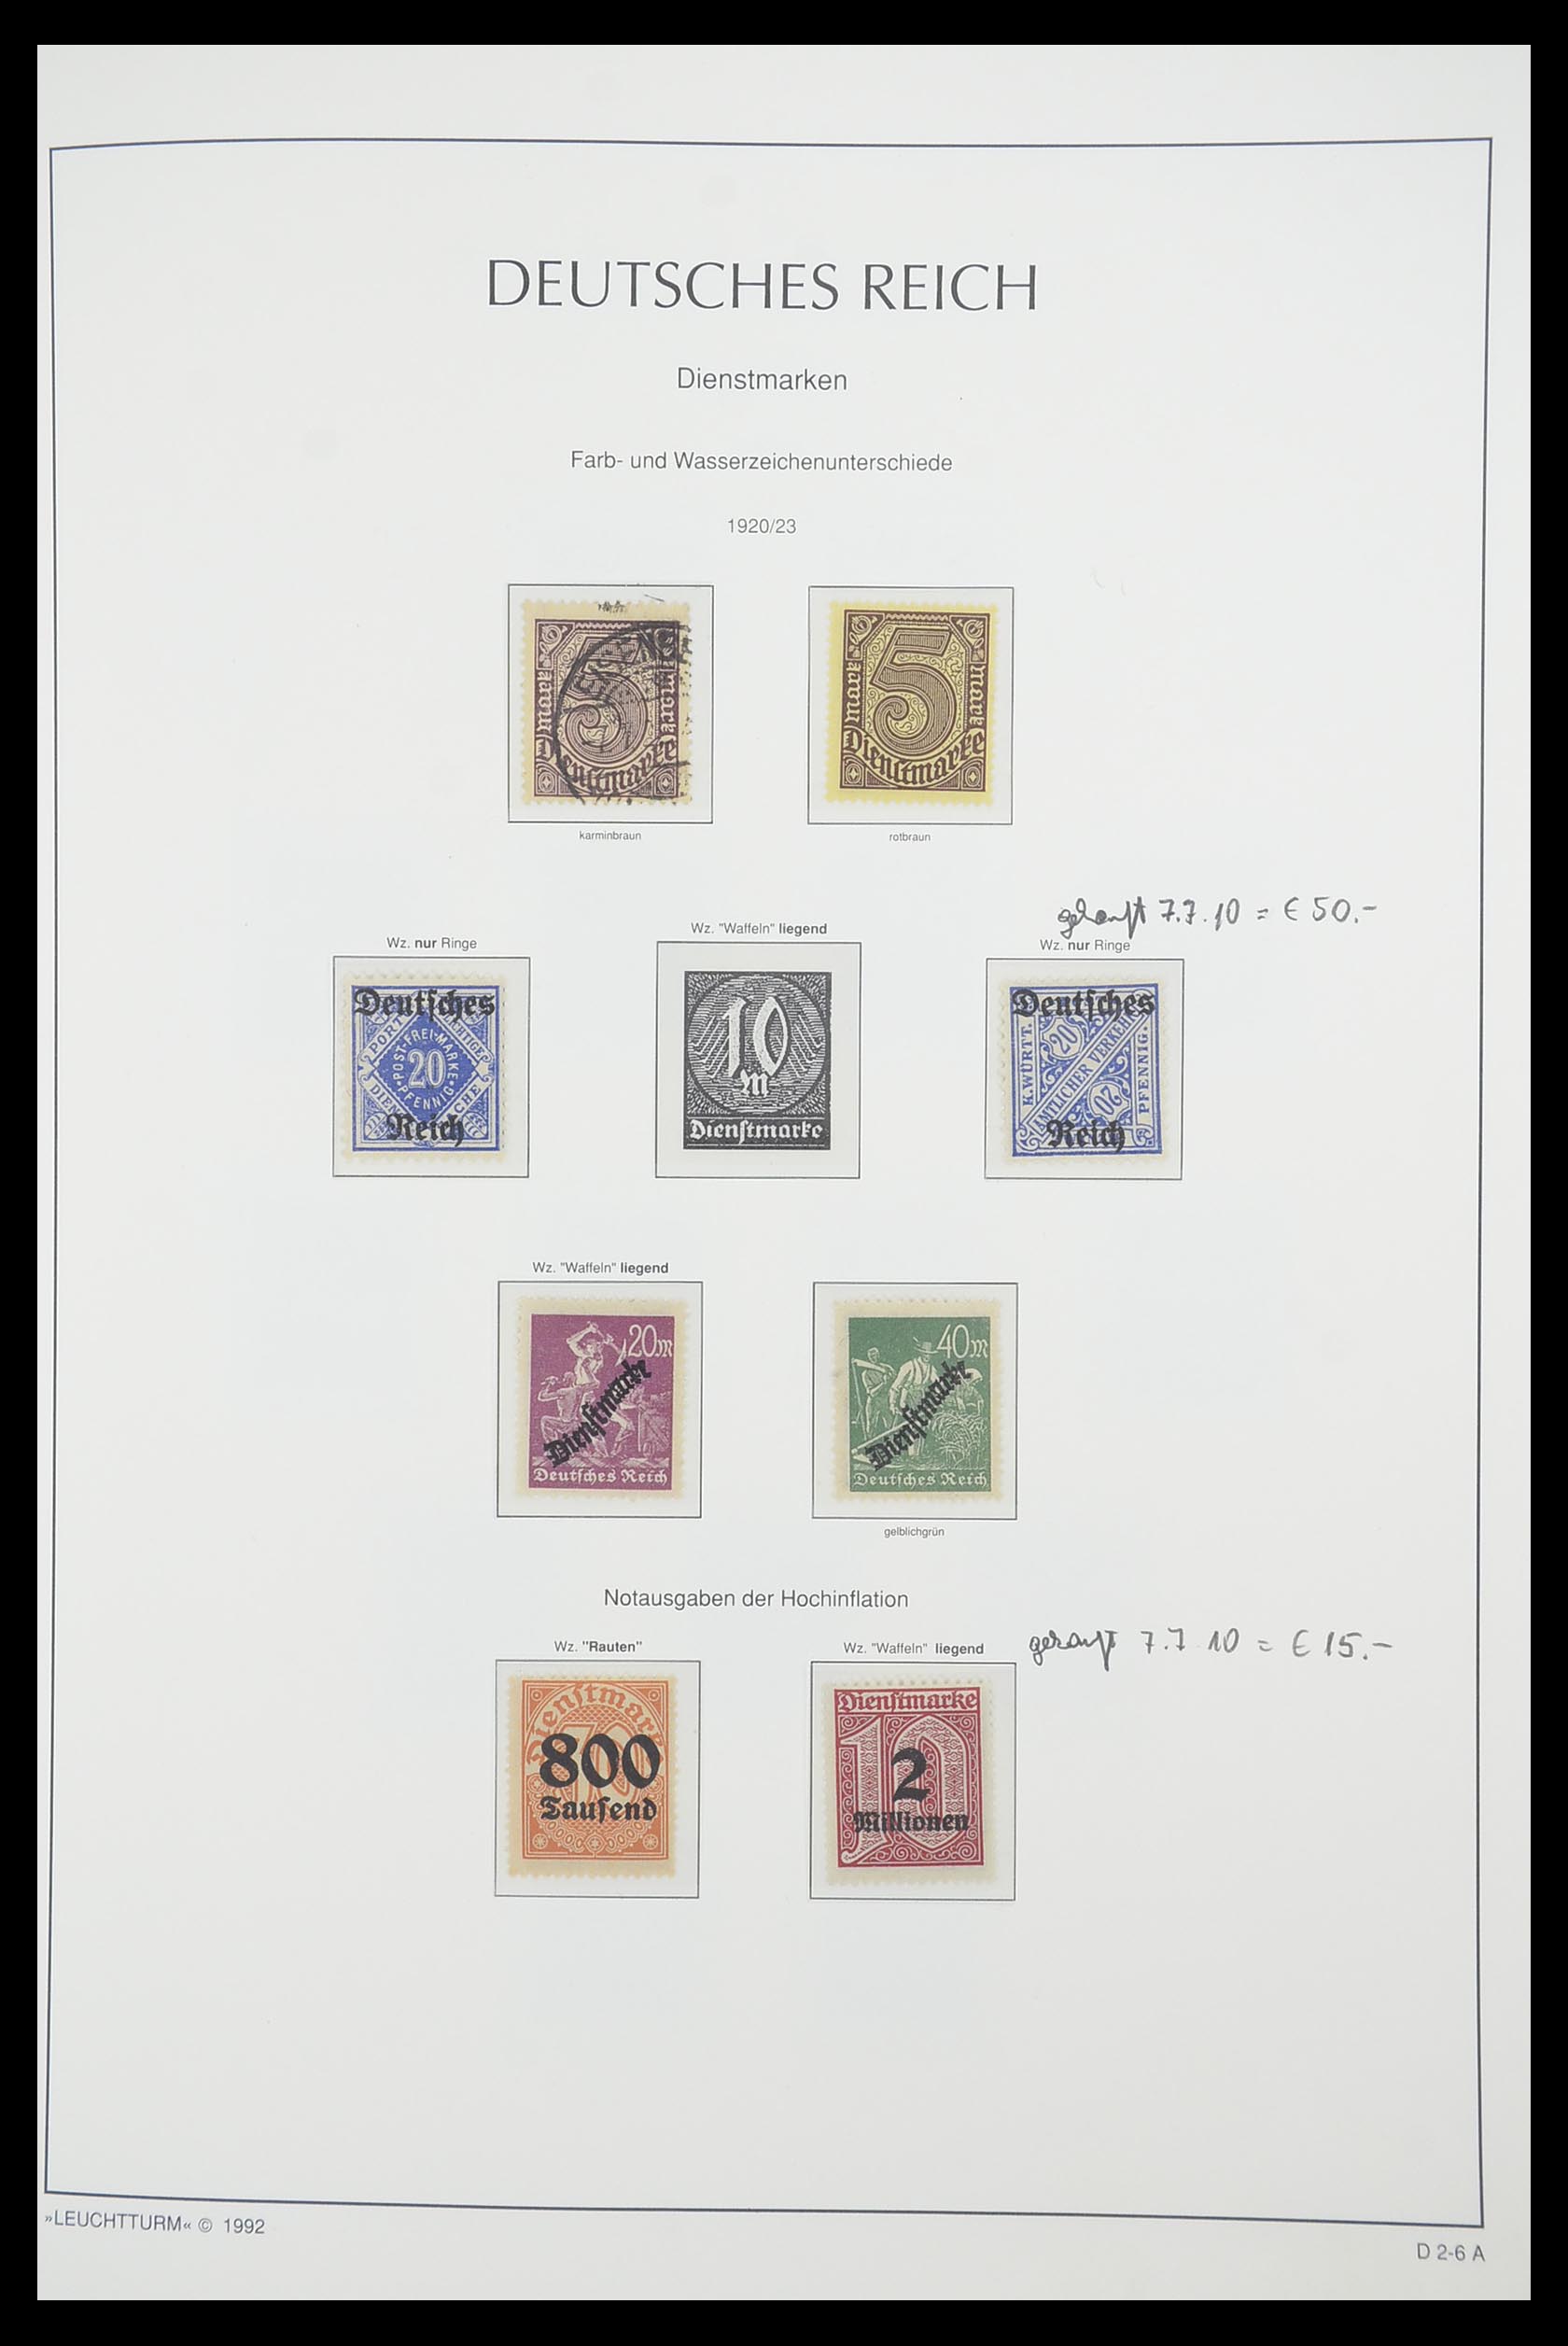 33455 043 - Stamp collection 33455 German Reich 1872-1945.